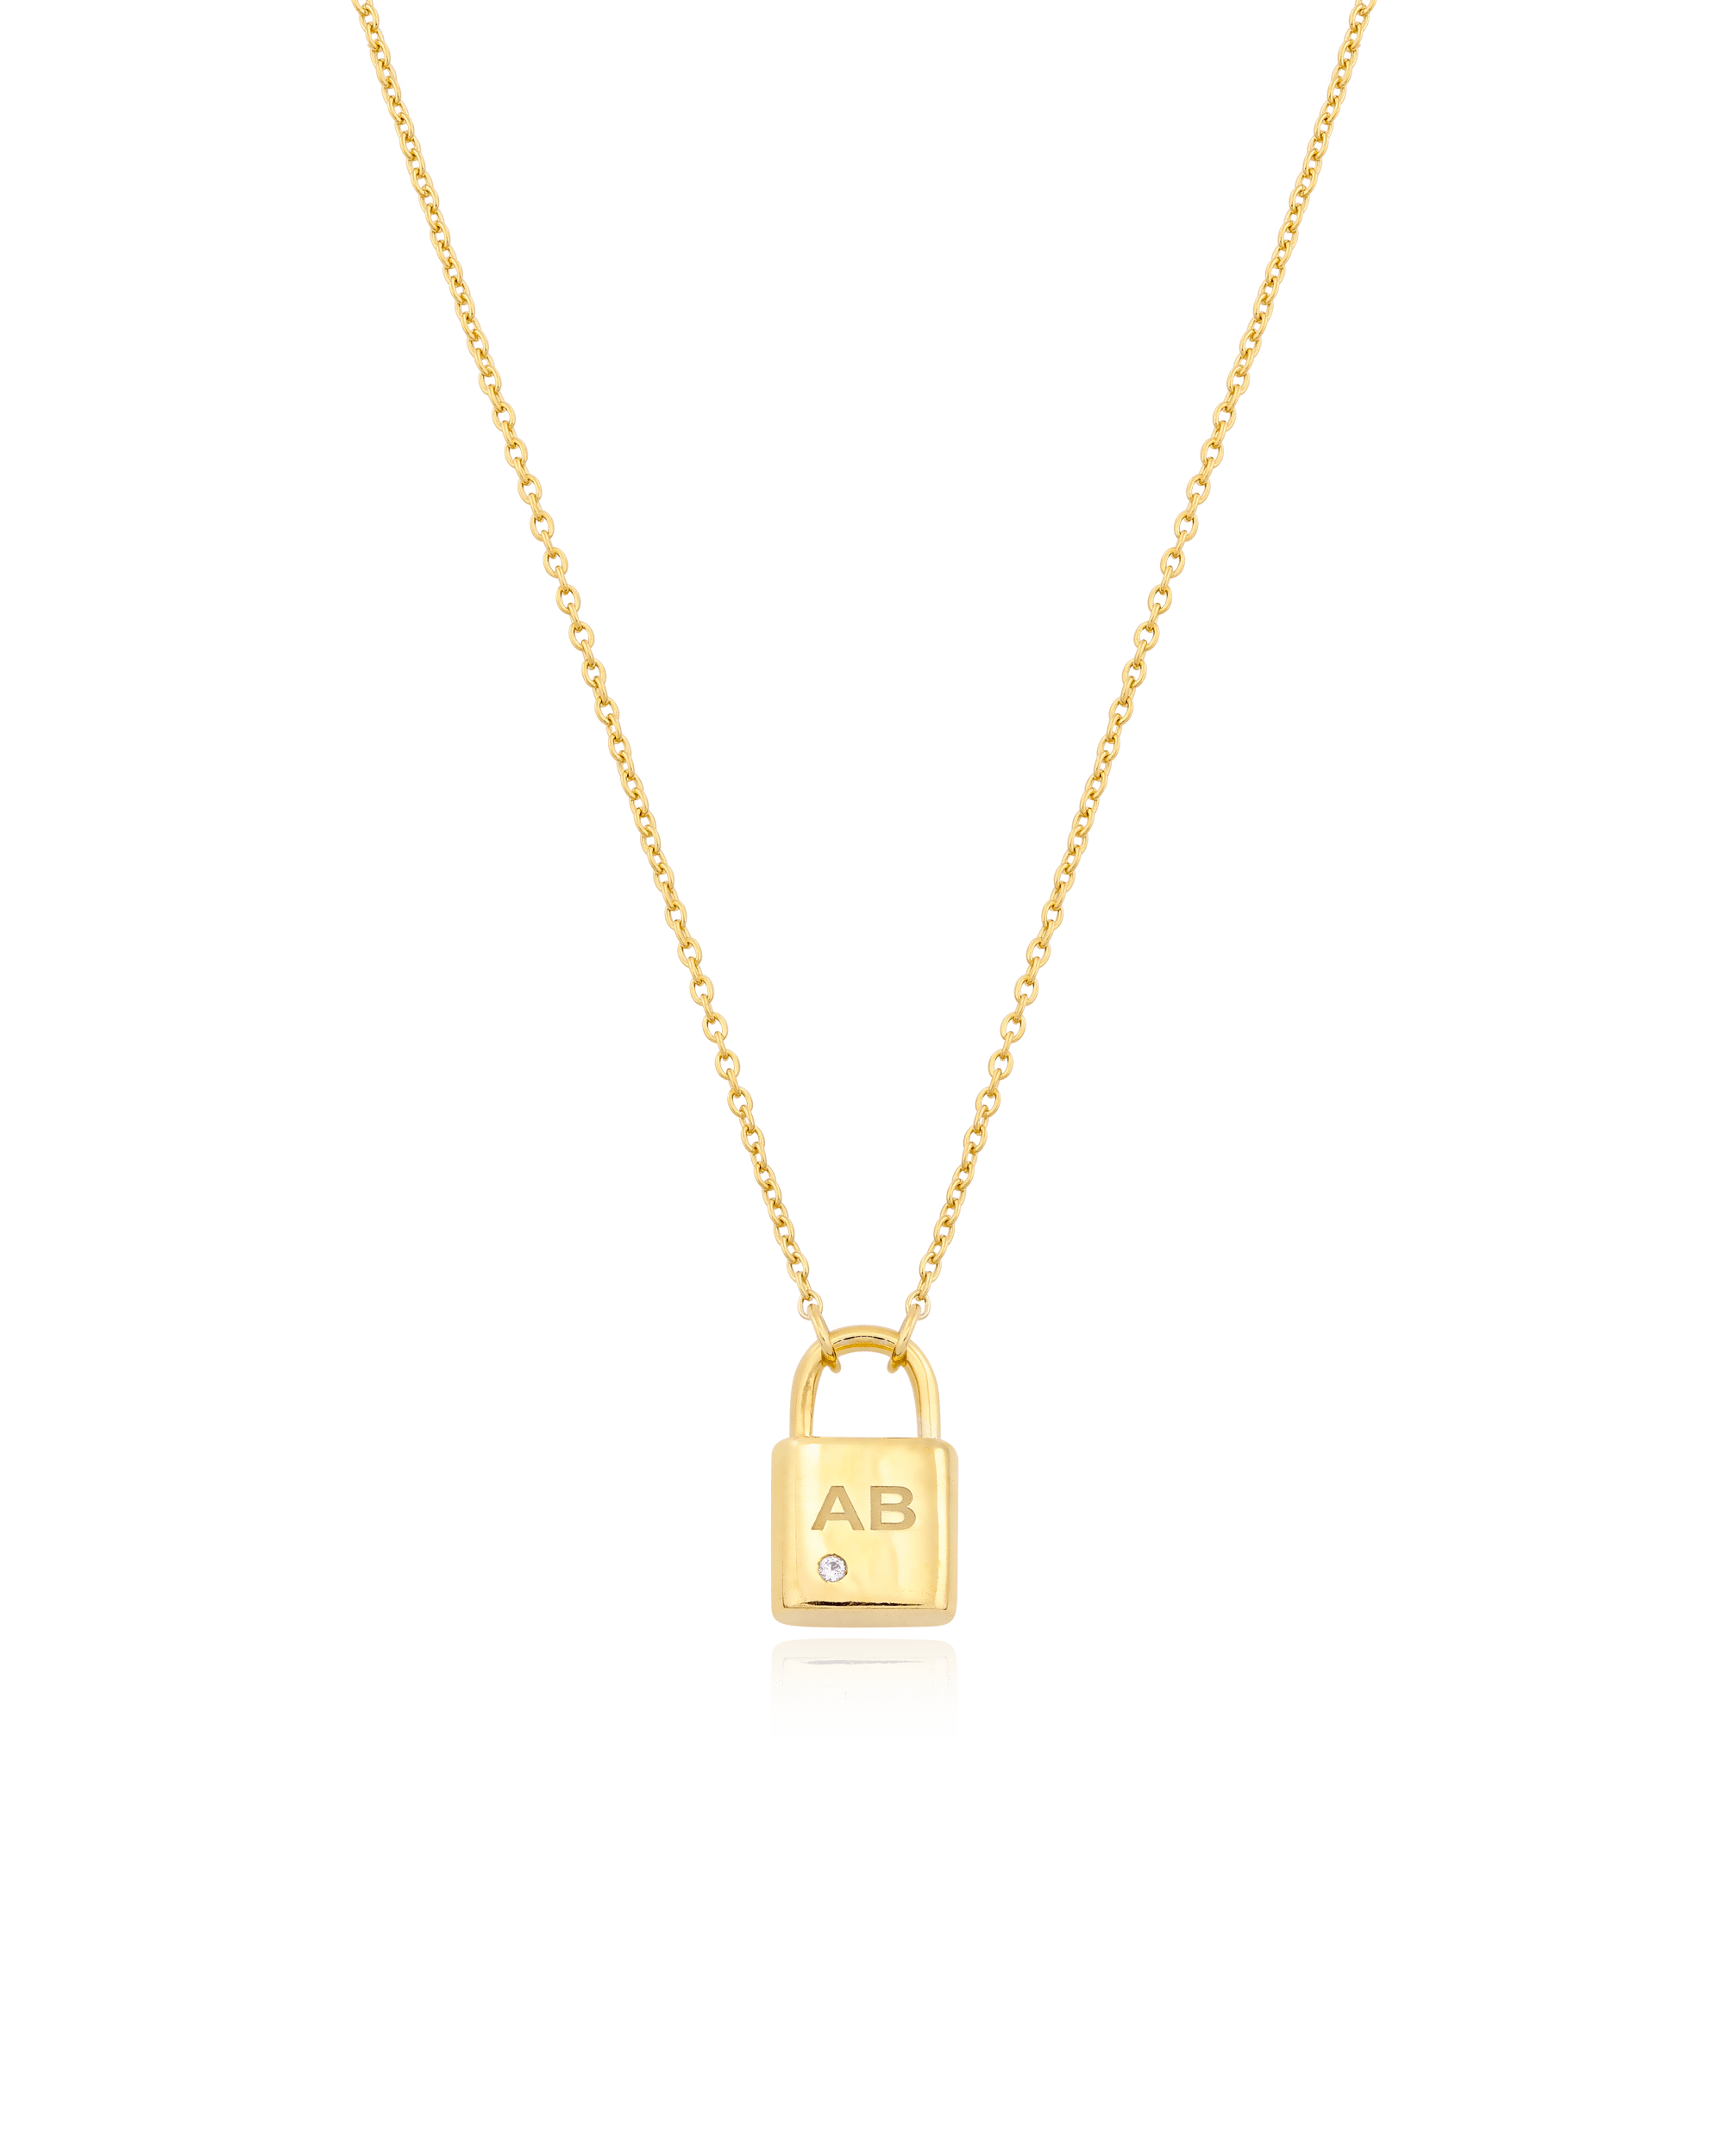 Gold Lock Pendant Necklace Padlock Pendant Necklace Gold Lock 